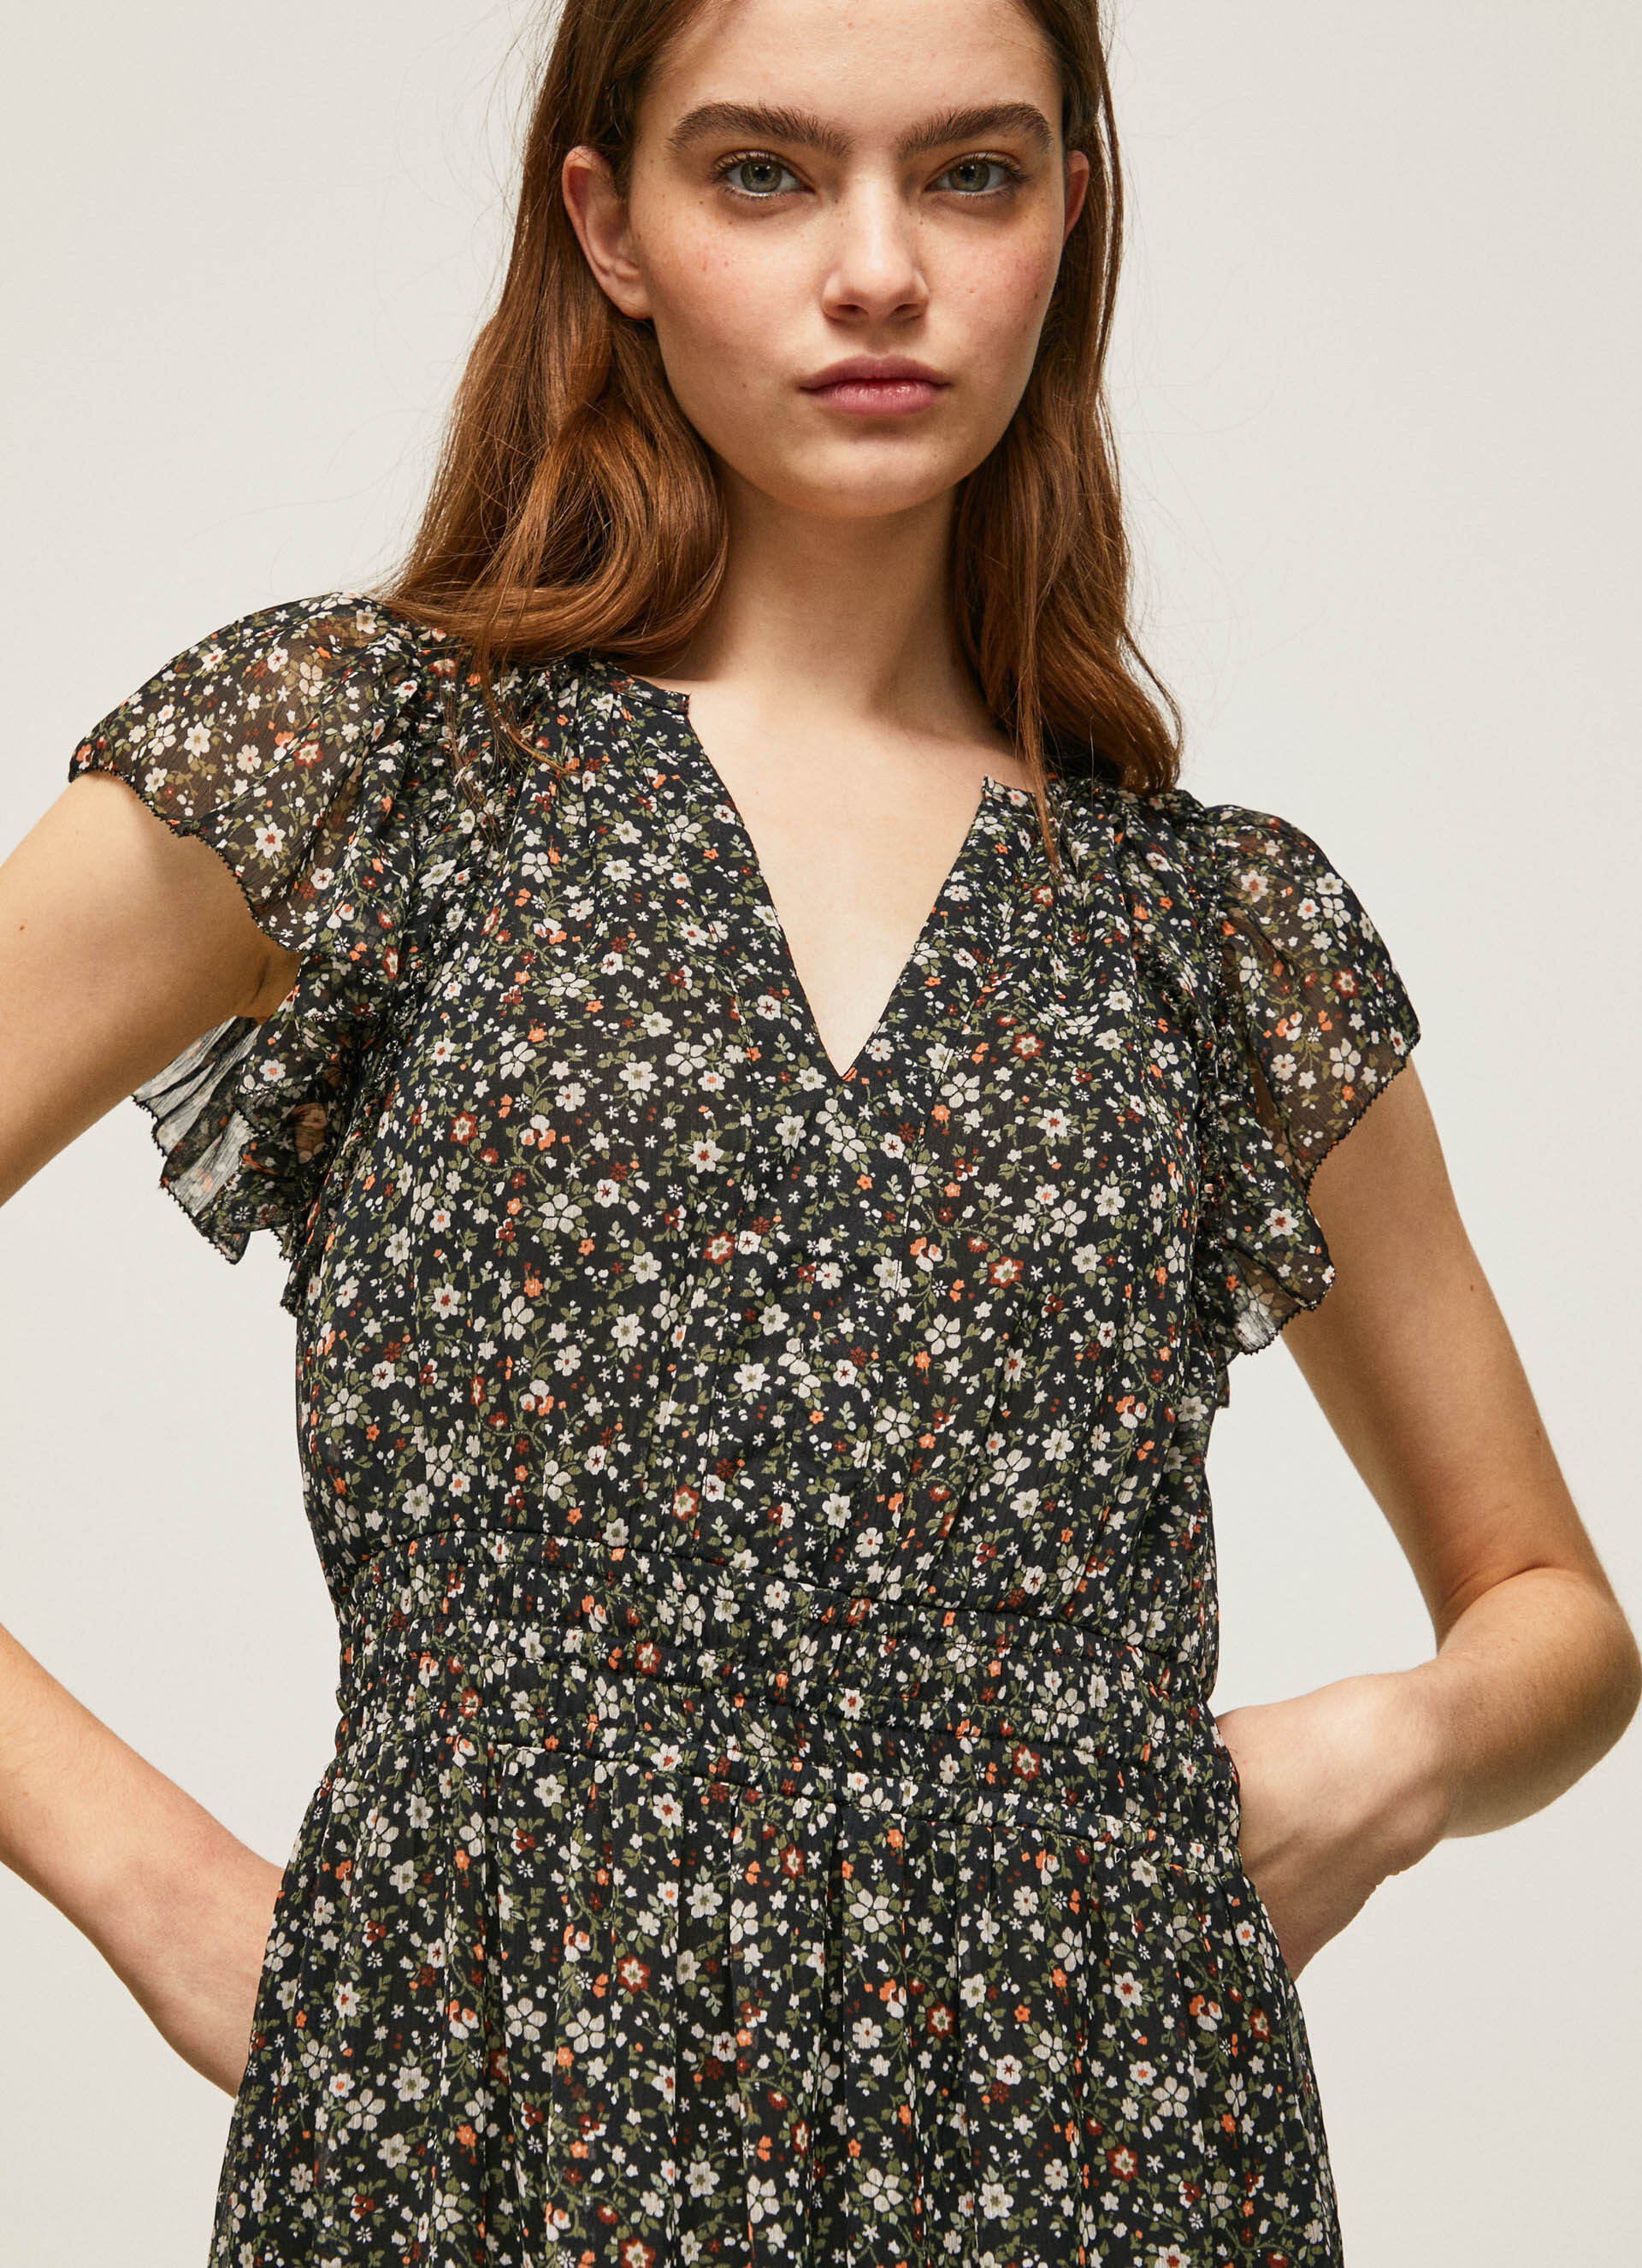 Pepe Jeans - Short dress with floral pattern, Black, large image number 2